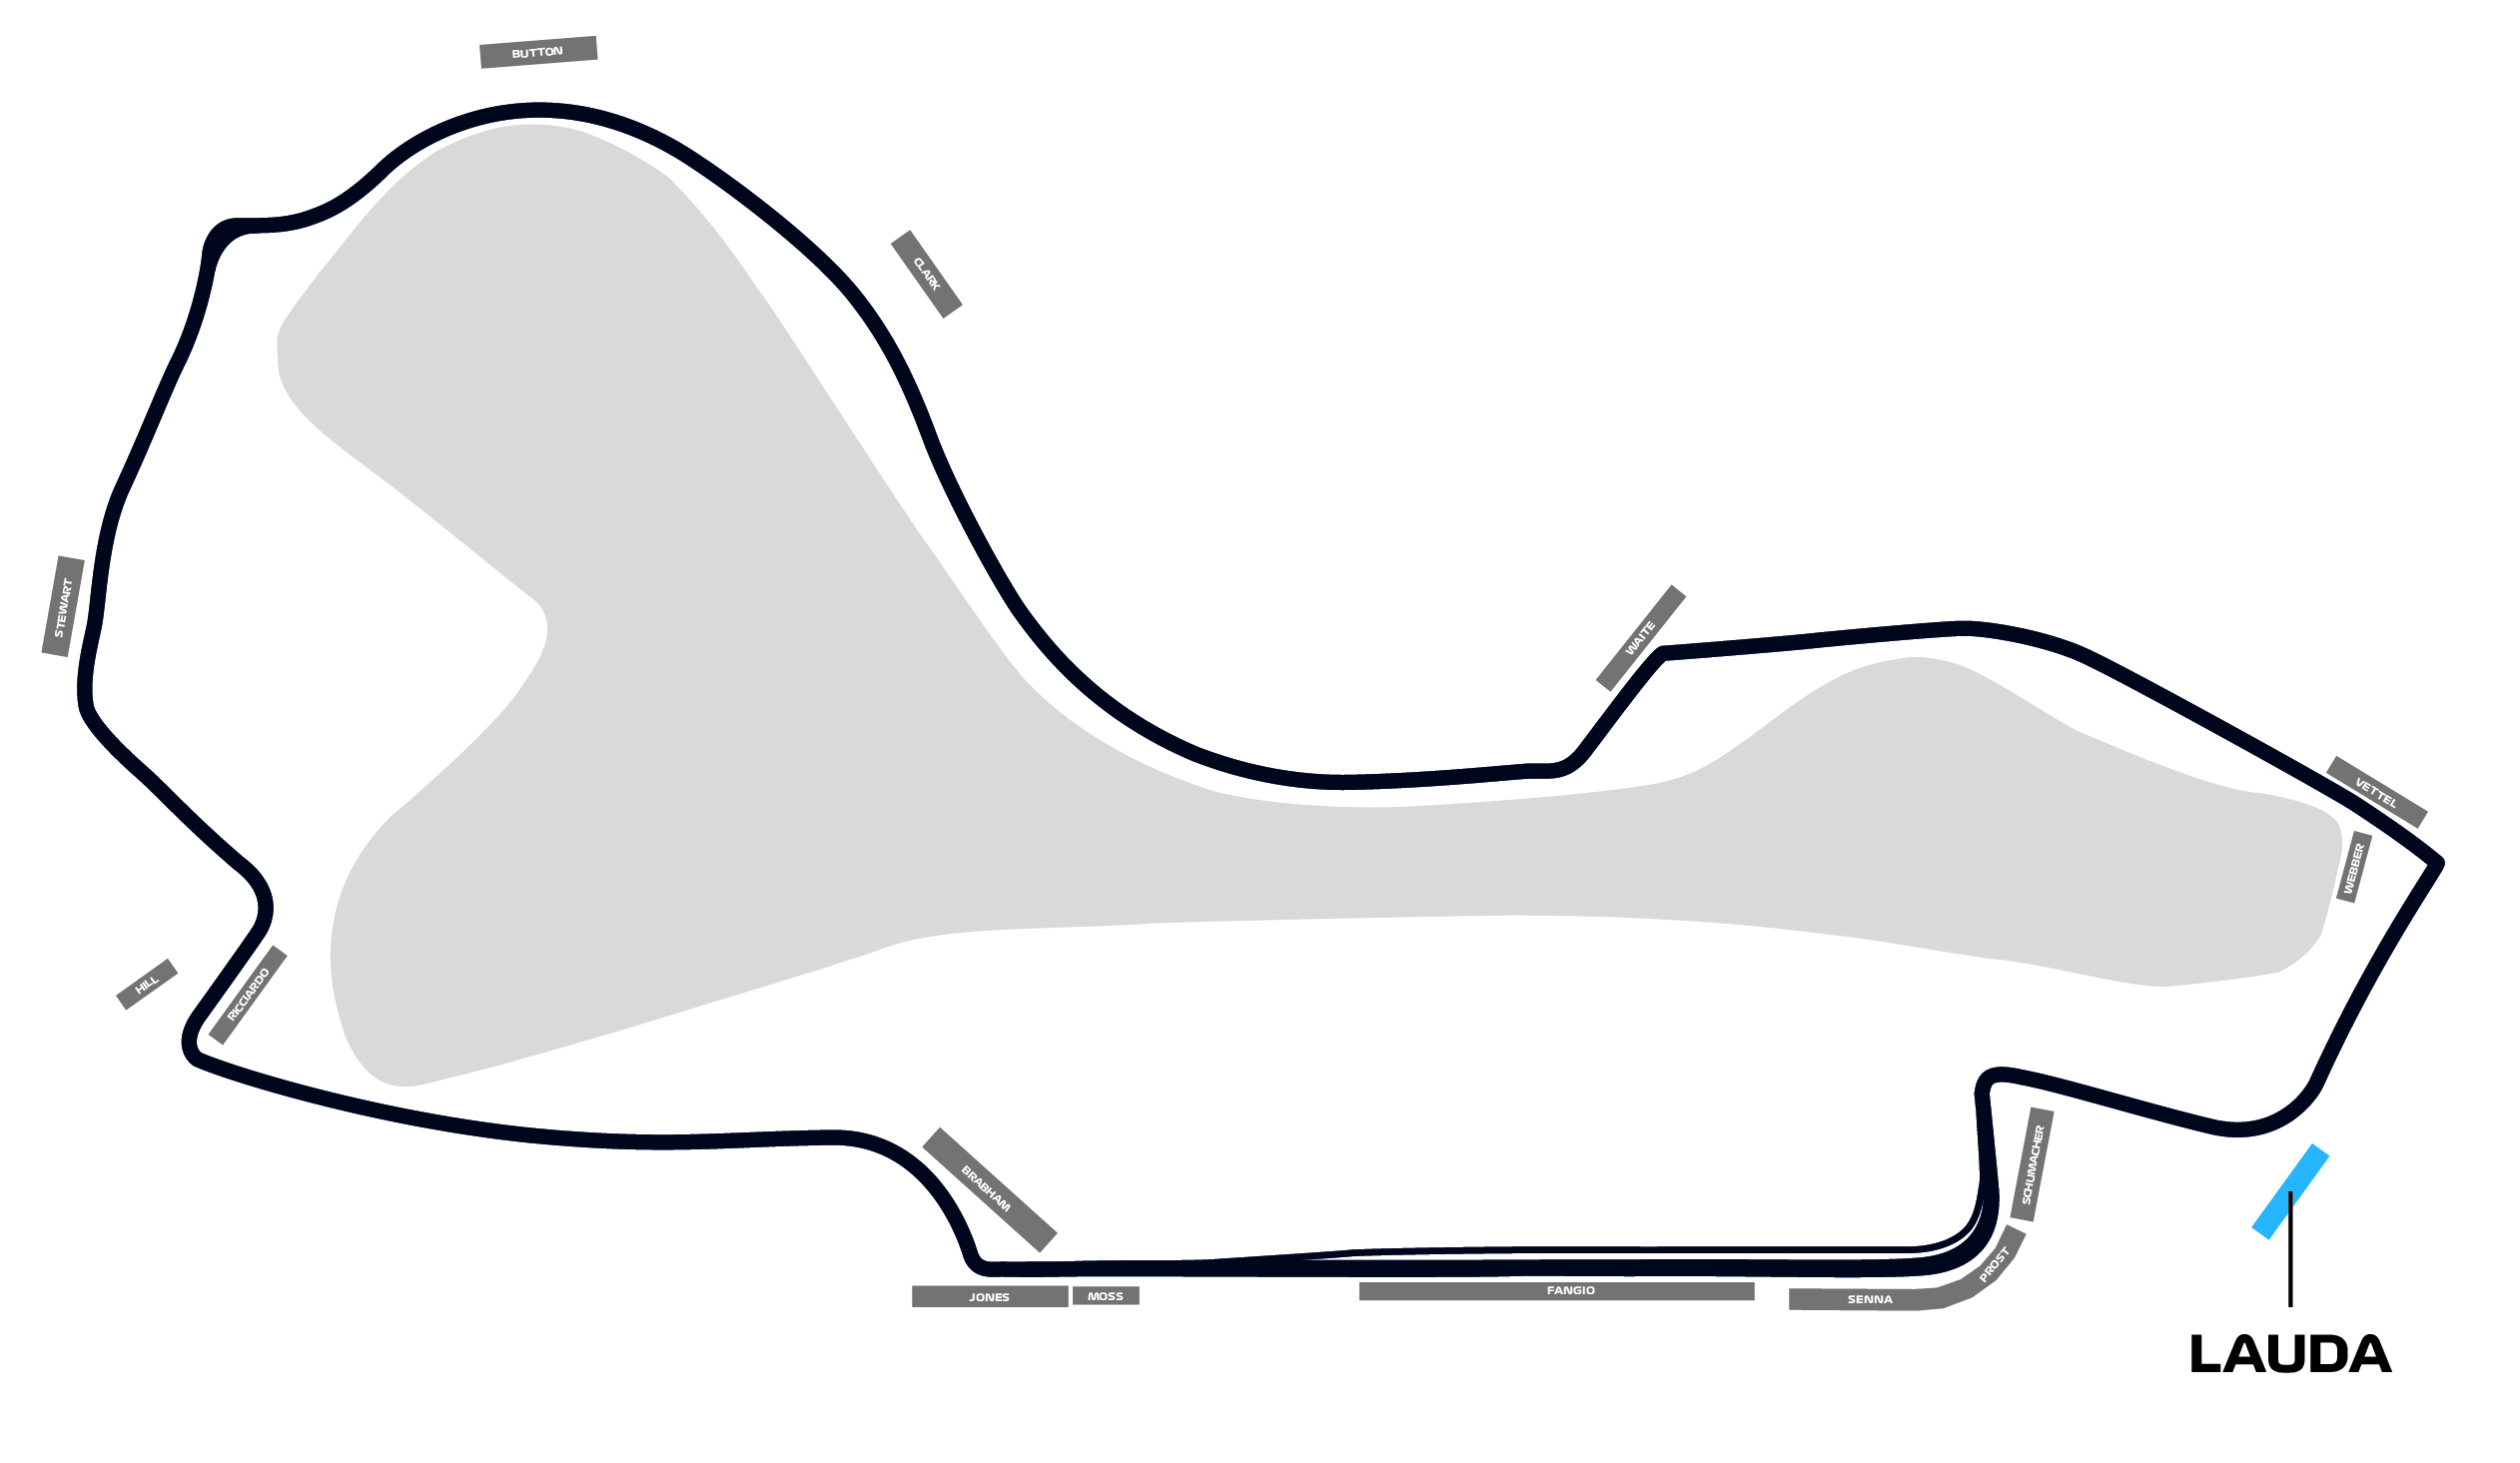 Map of Lauda Grandstand